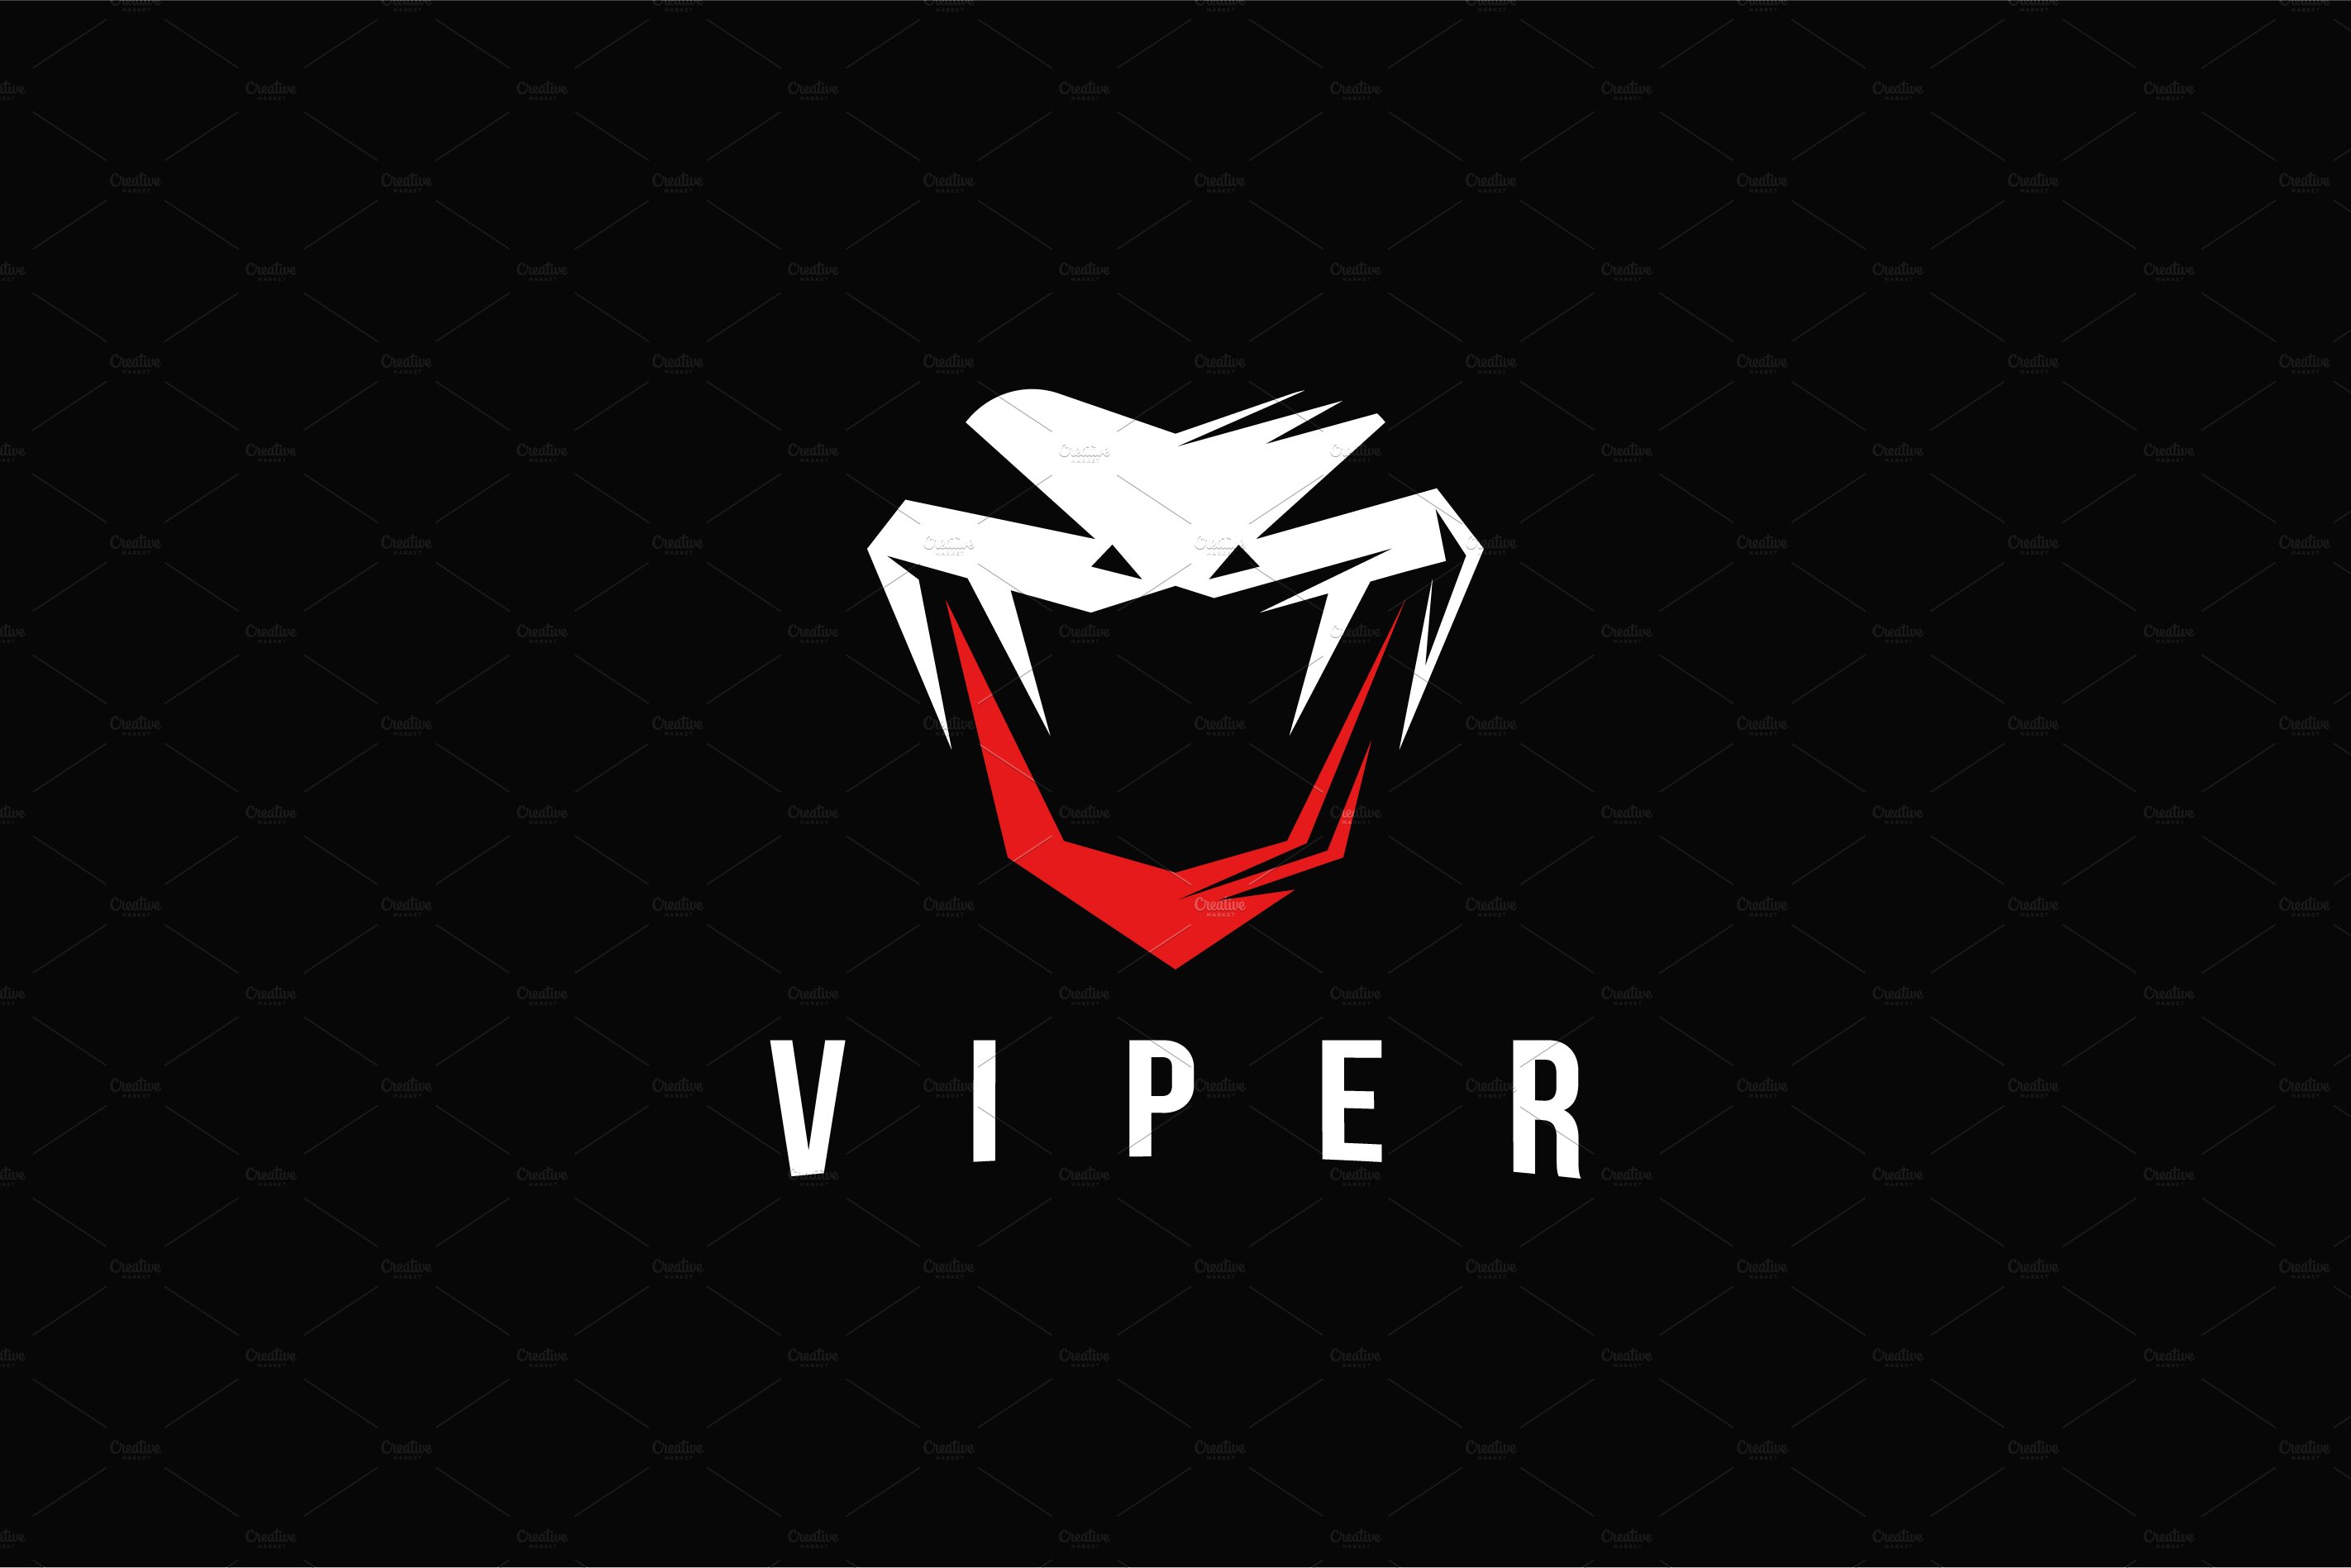 Agresive powerful viper snake logo cover image.